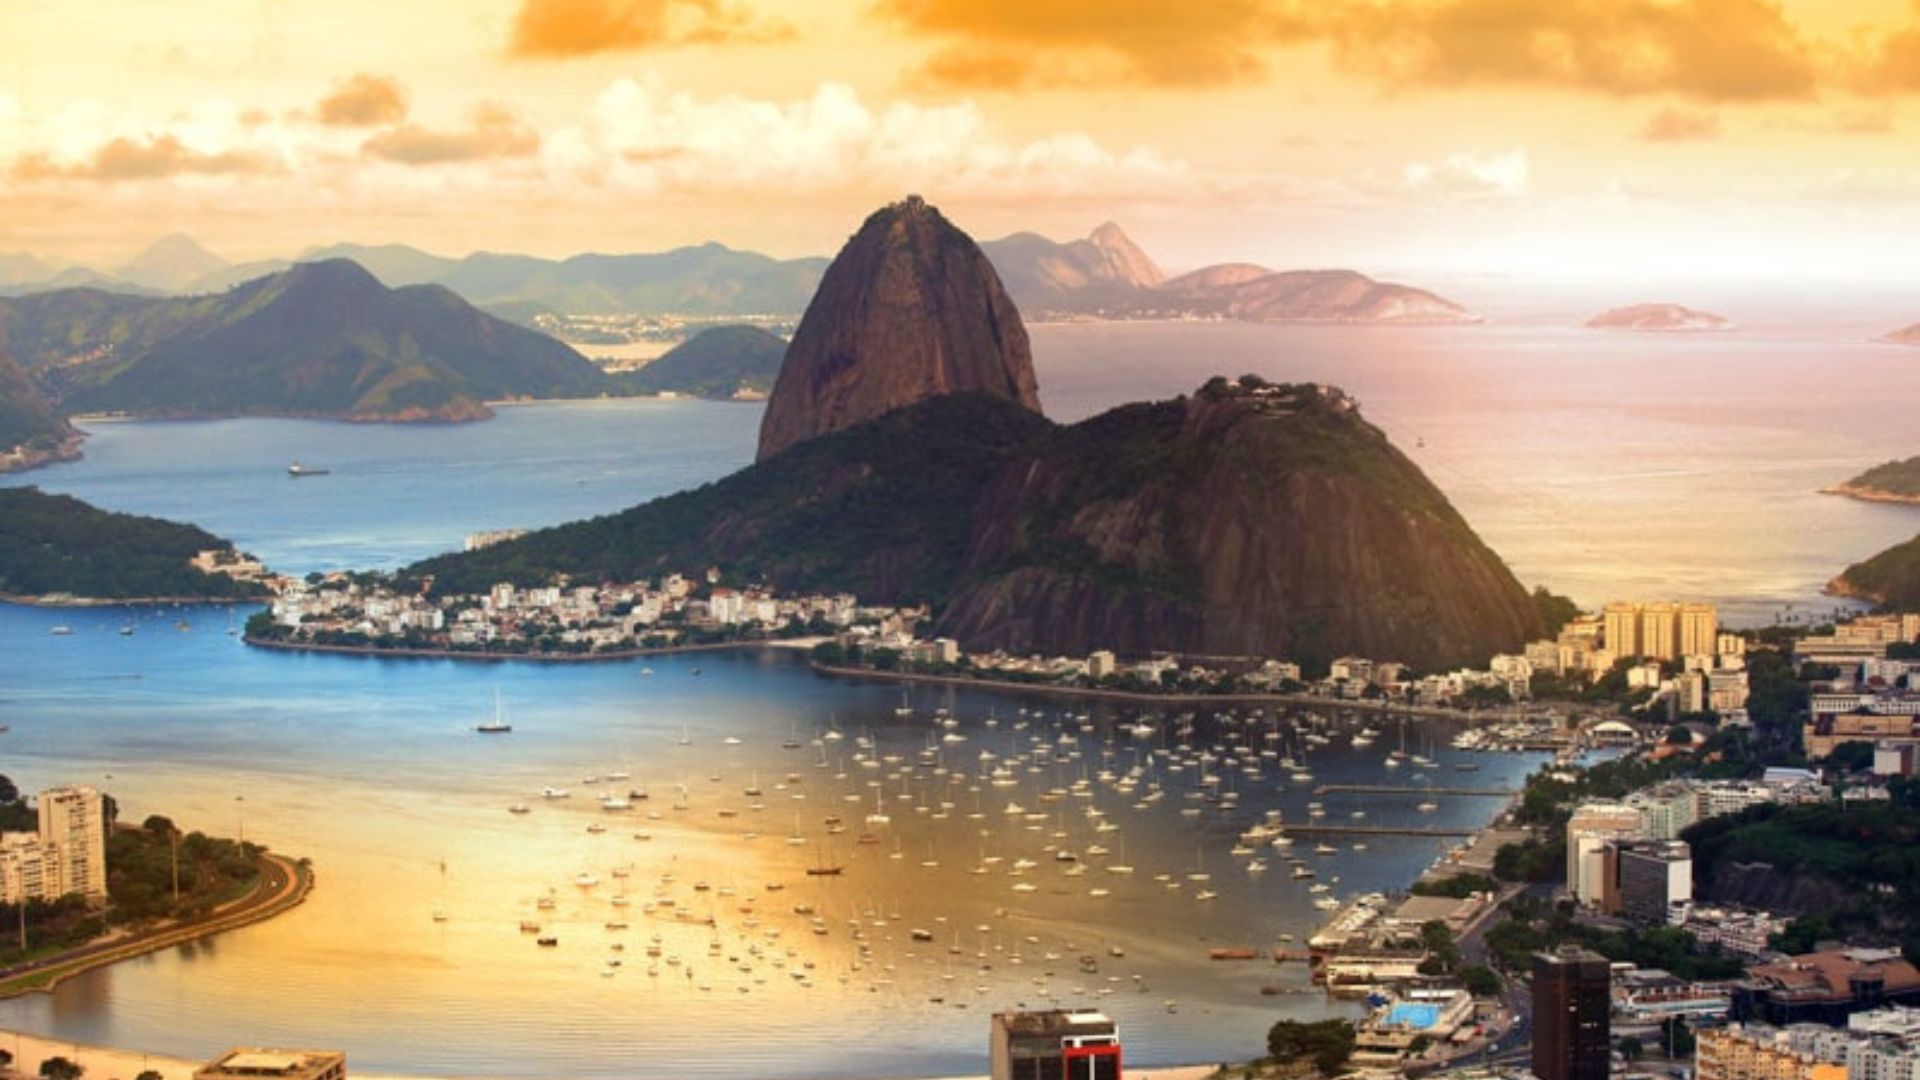 Brazil Rio De Janeiro